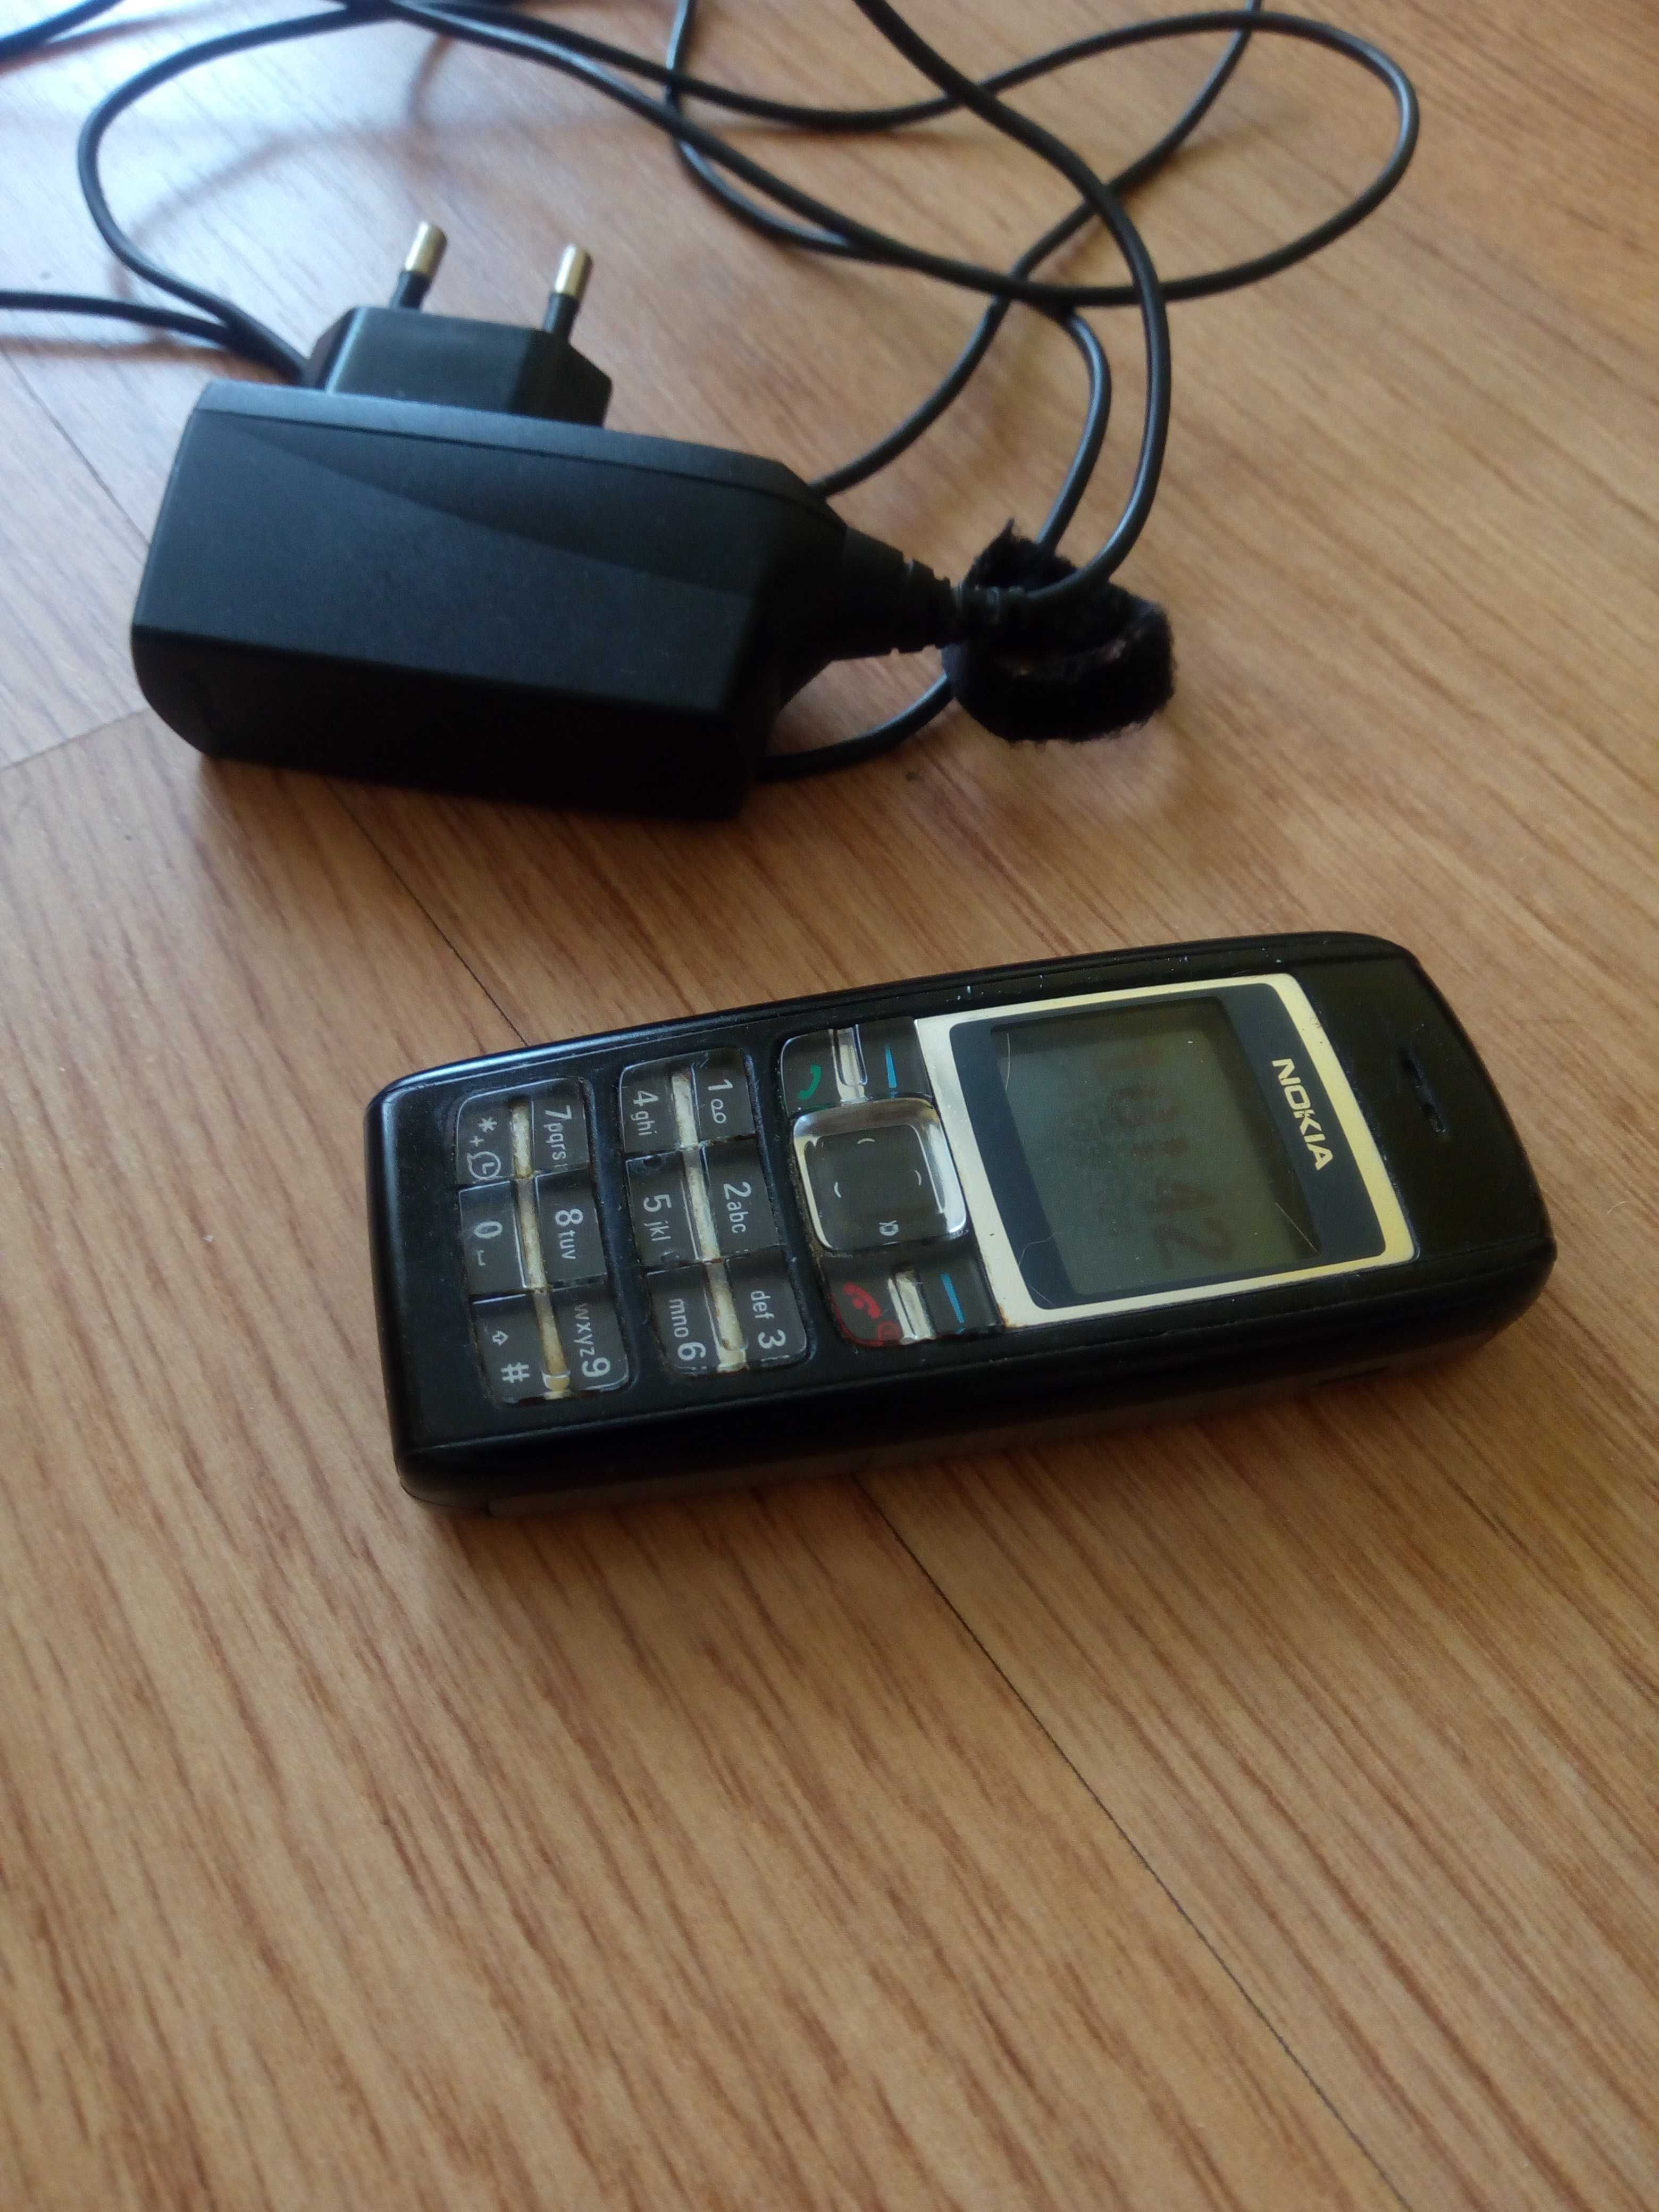 Telefon Nokia 1600